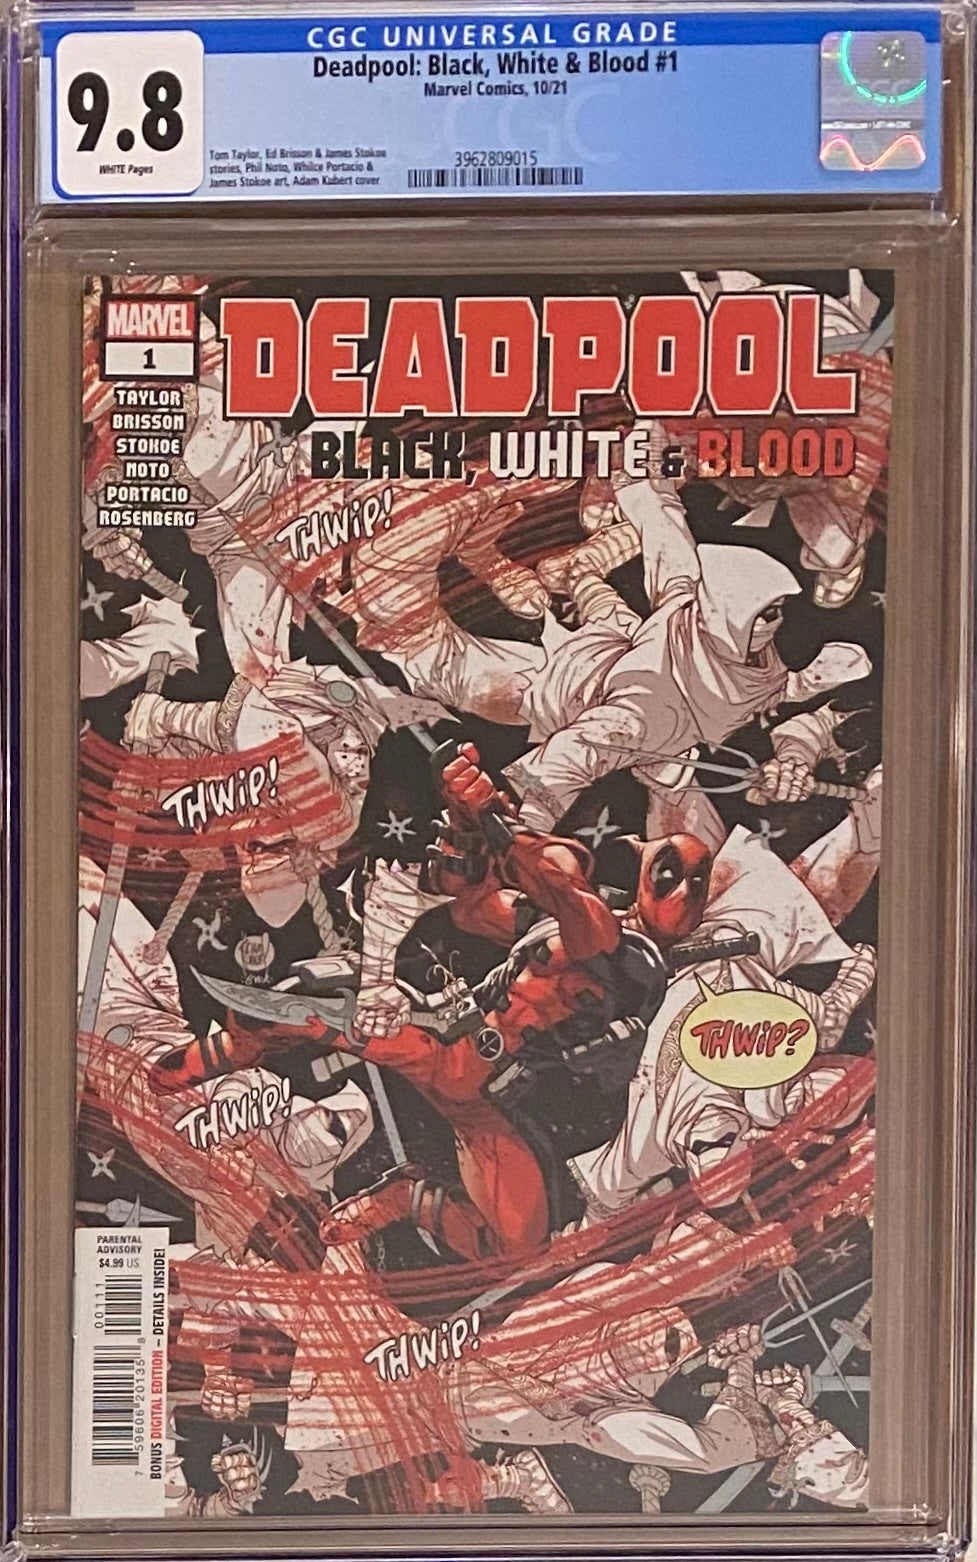 Deadpool: Black, White, and Blood #1 CGC 9.8